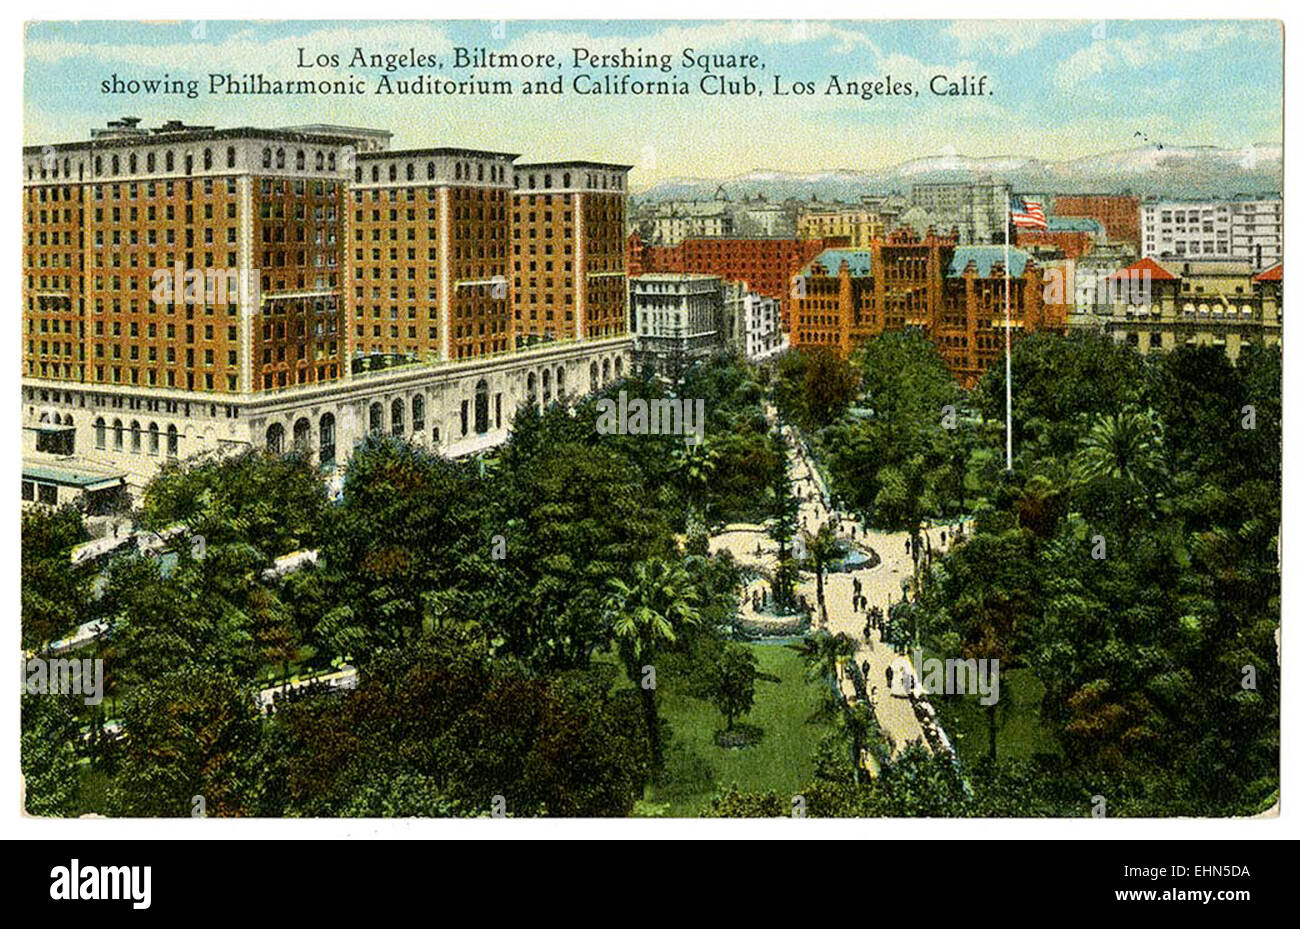 Los Angeles, Biltmore, Pershing Square, zeigt Philharmonic Auditorium und California Club, Los Angeles, Kalifornien Stockfoto